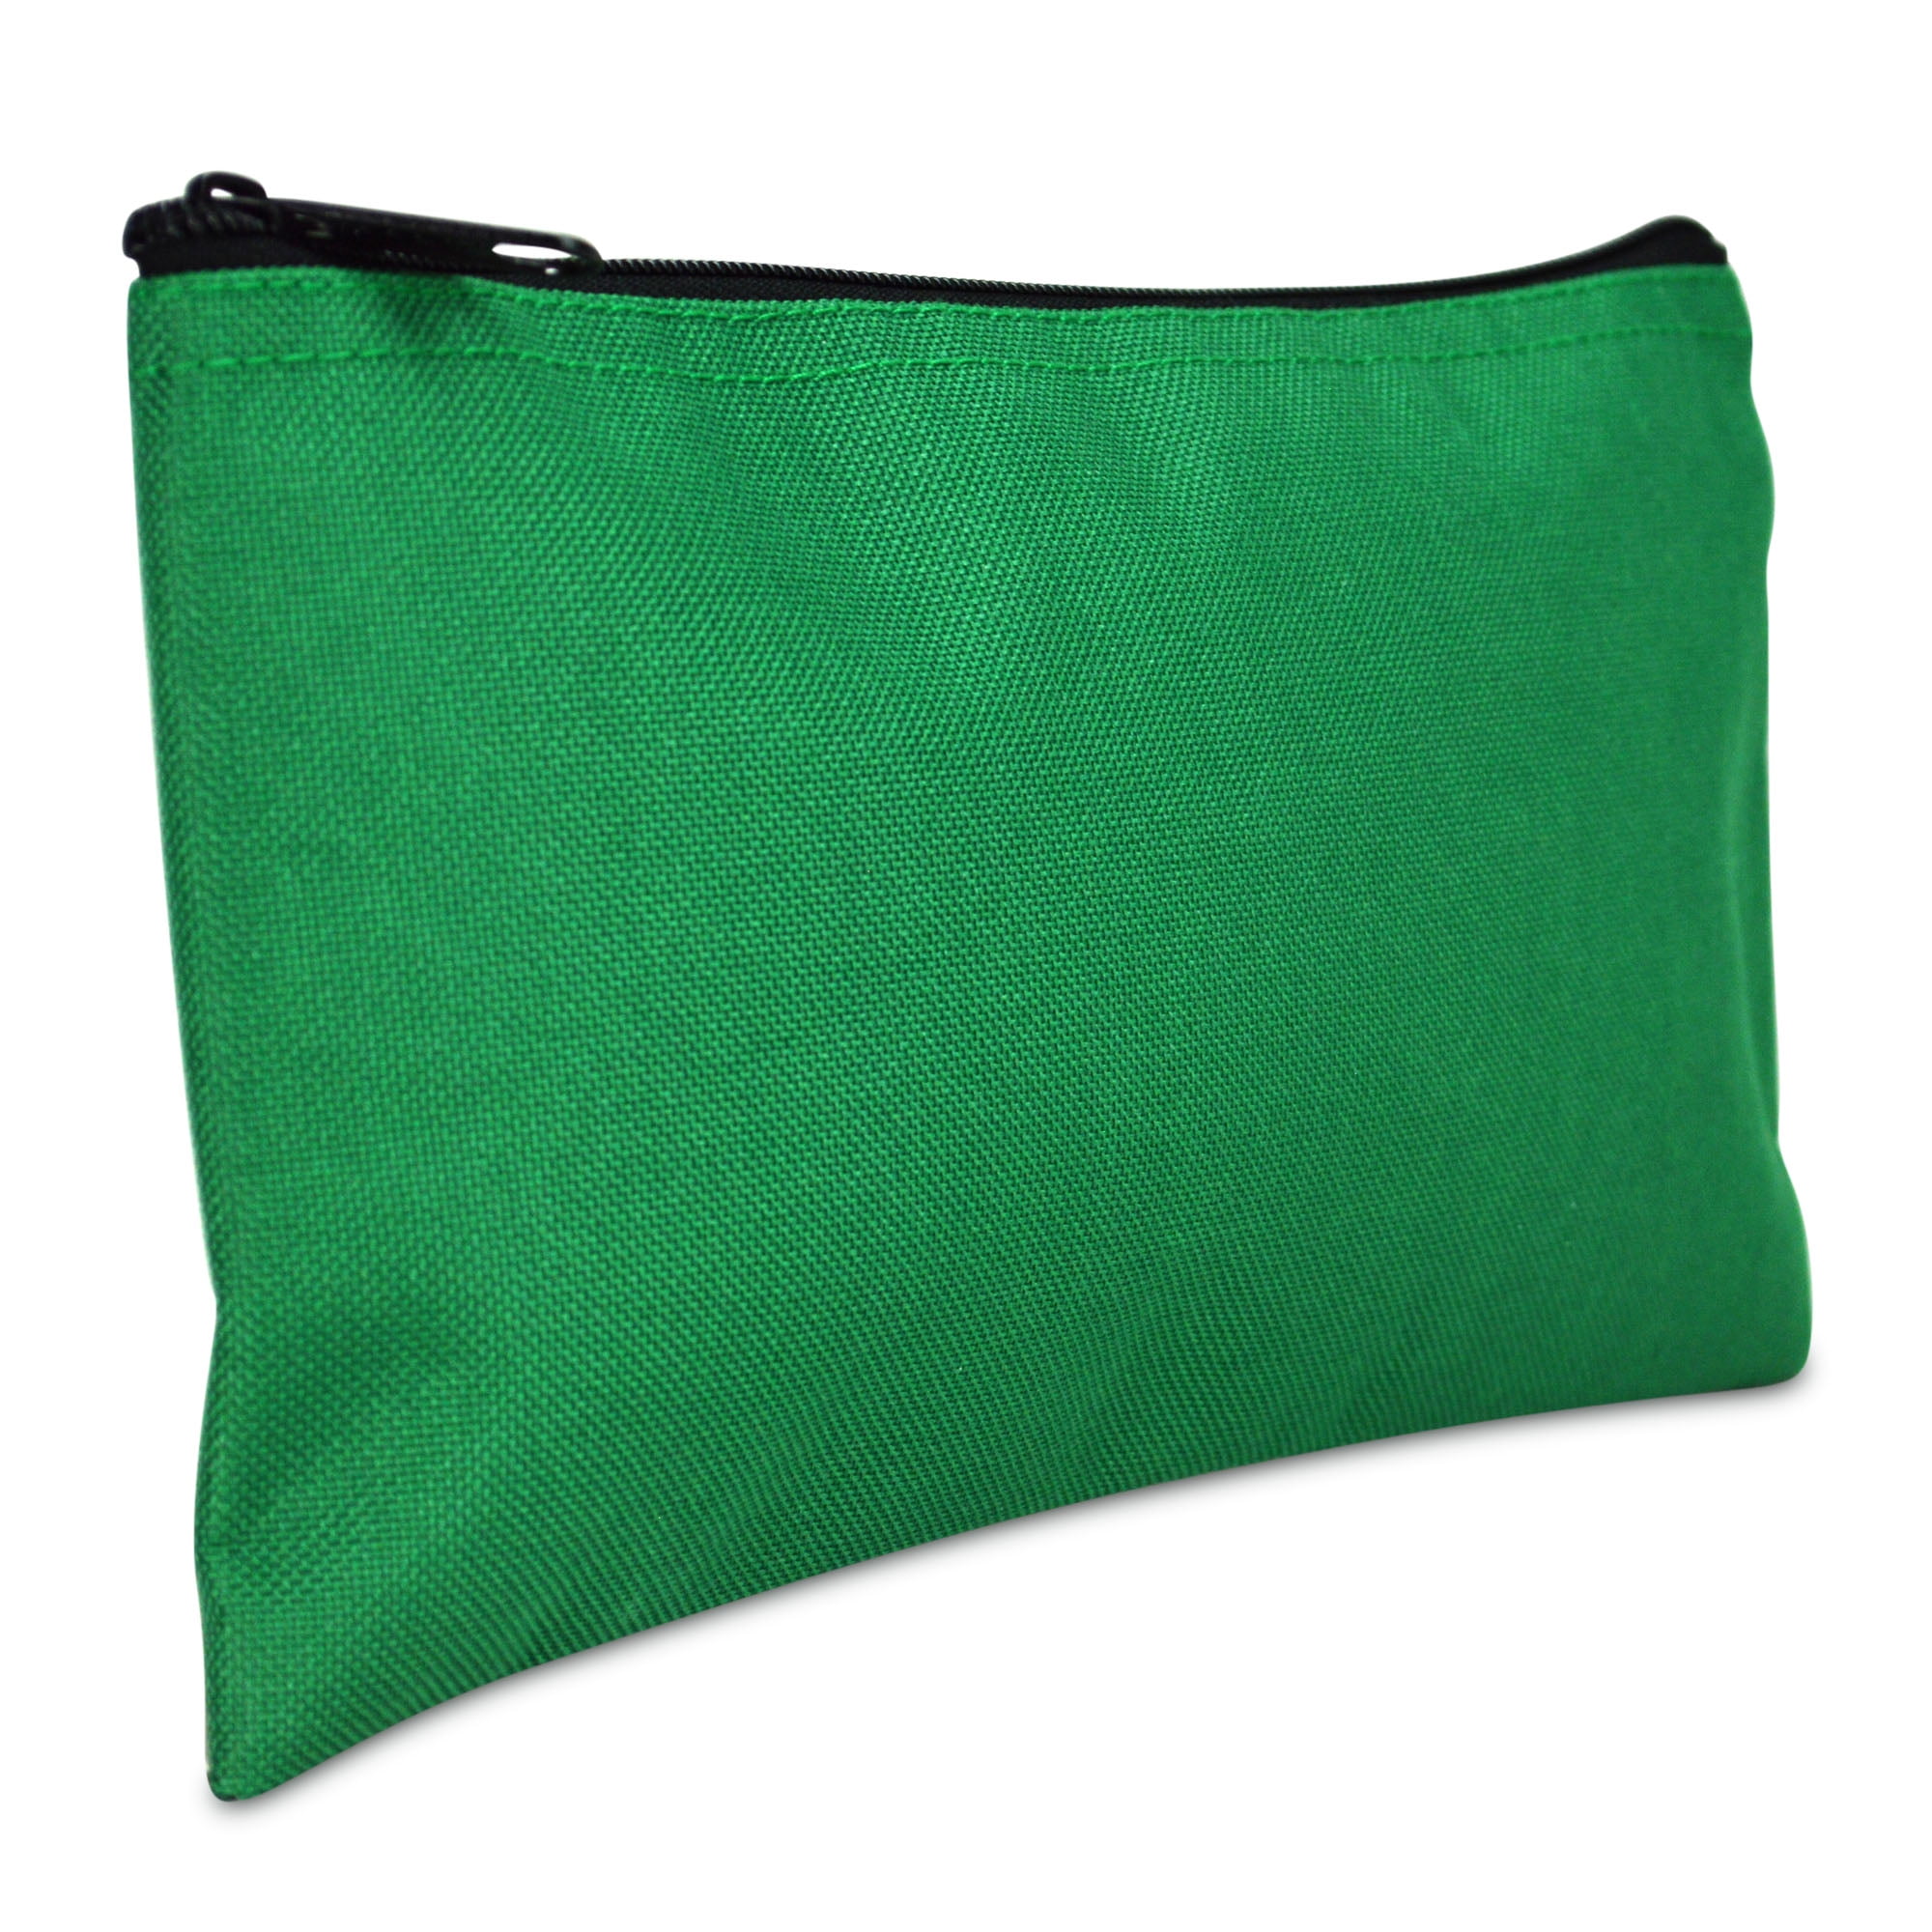 MDM Security Bank Deposit Utility Zipper Coin Bag/ Forest Green Money Bag. 11x6 inch 